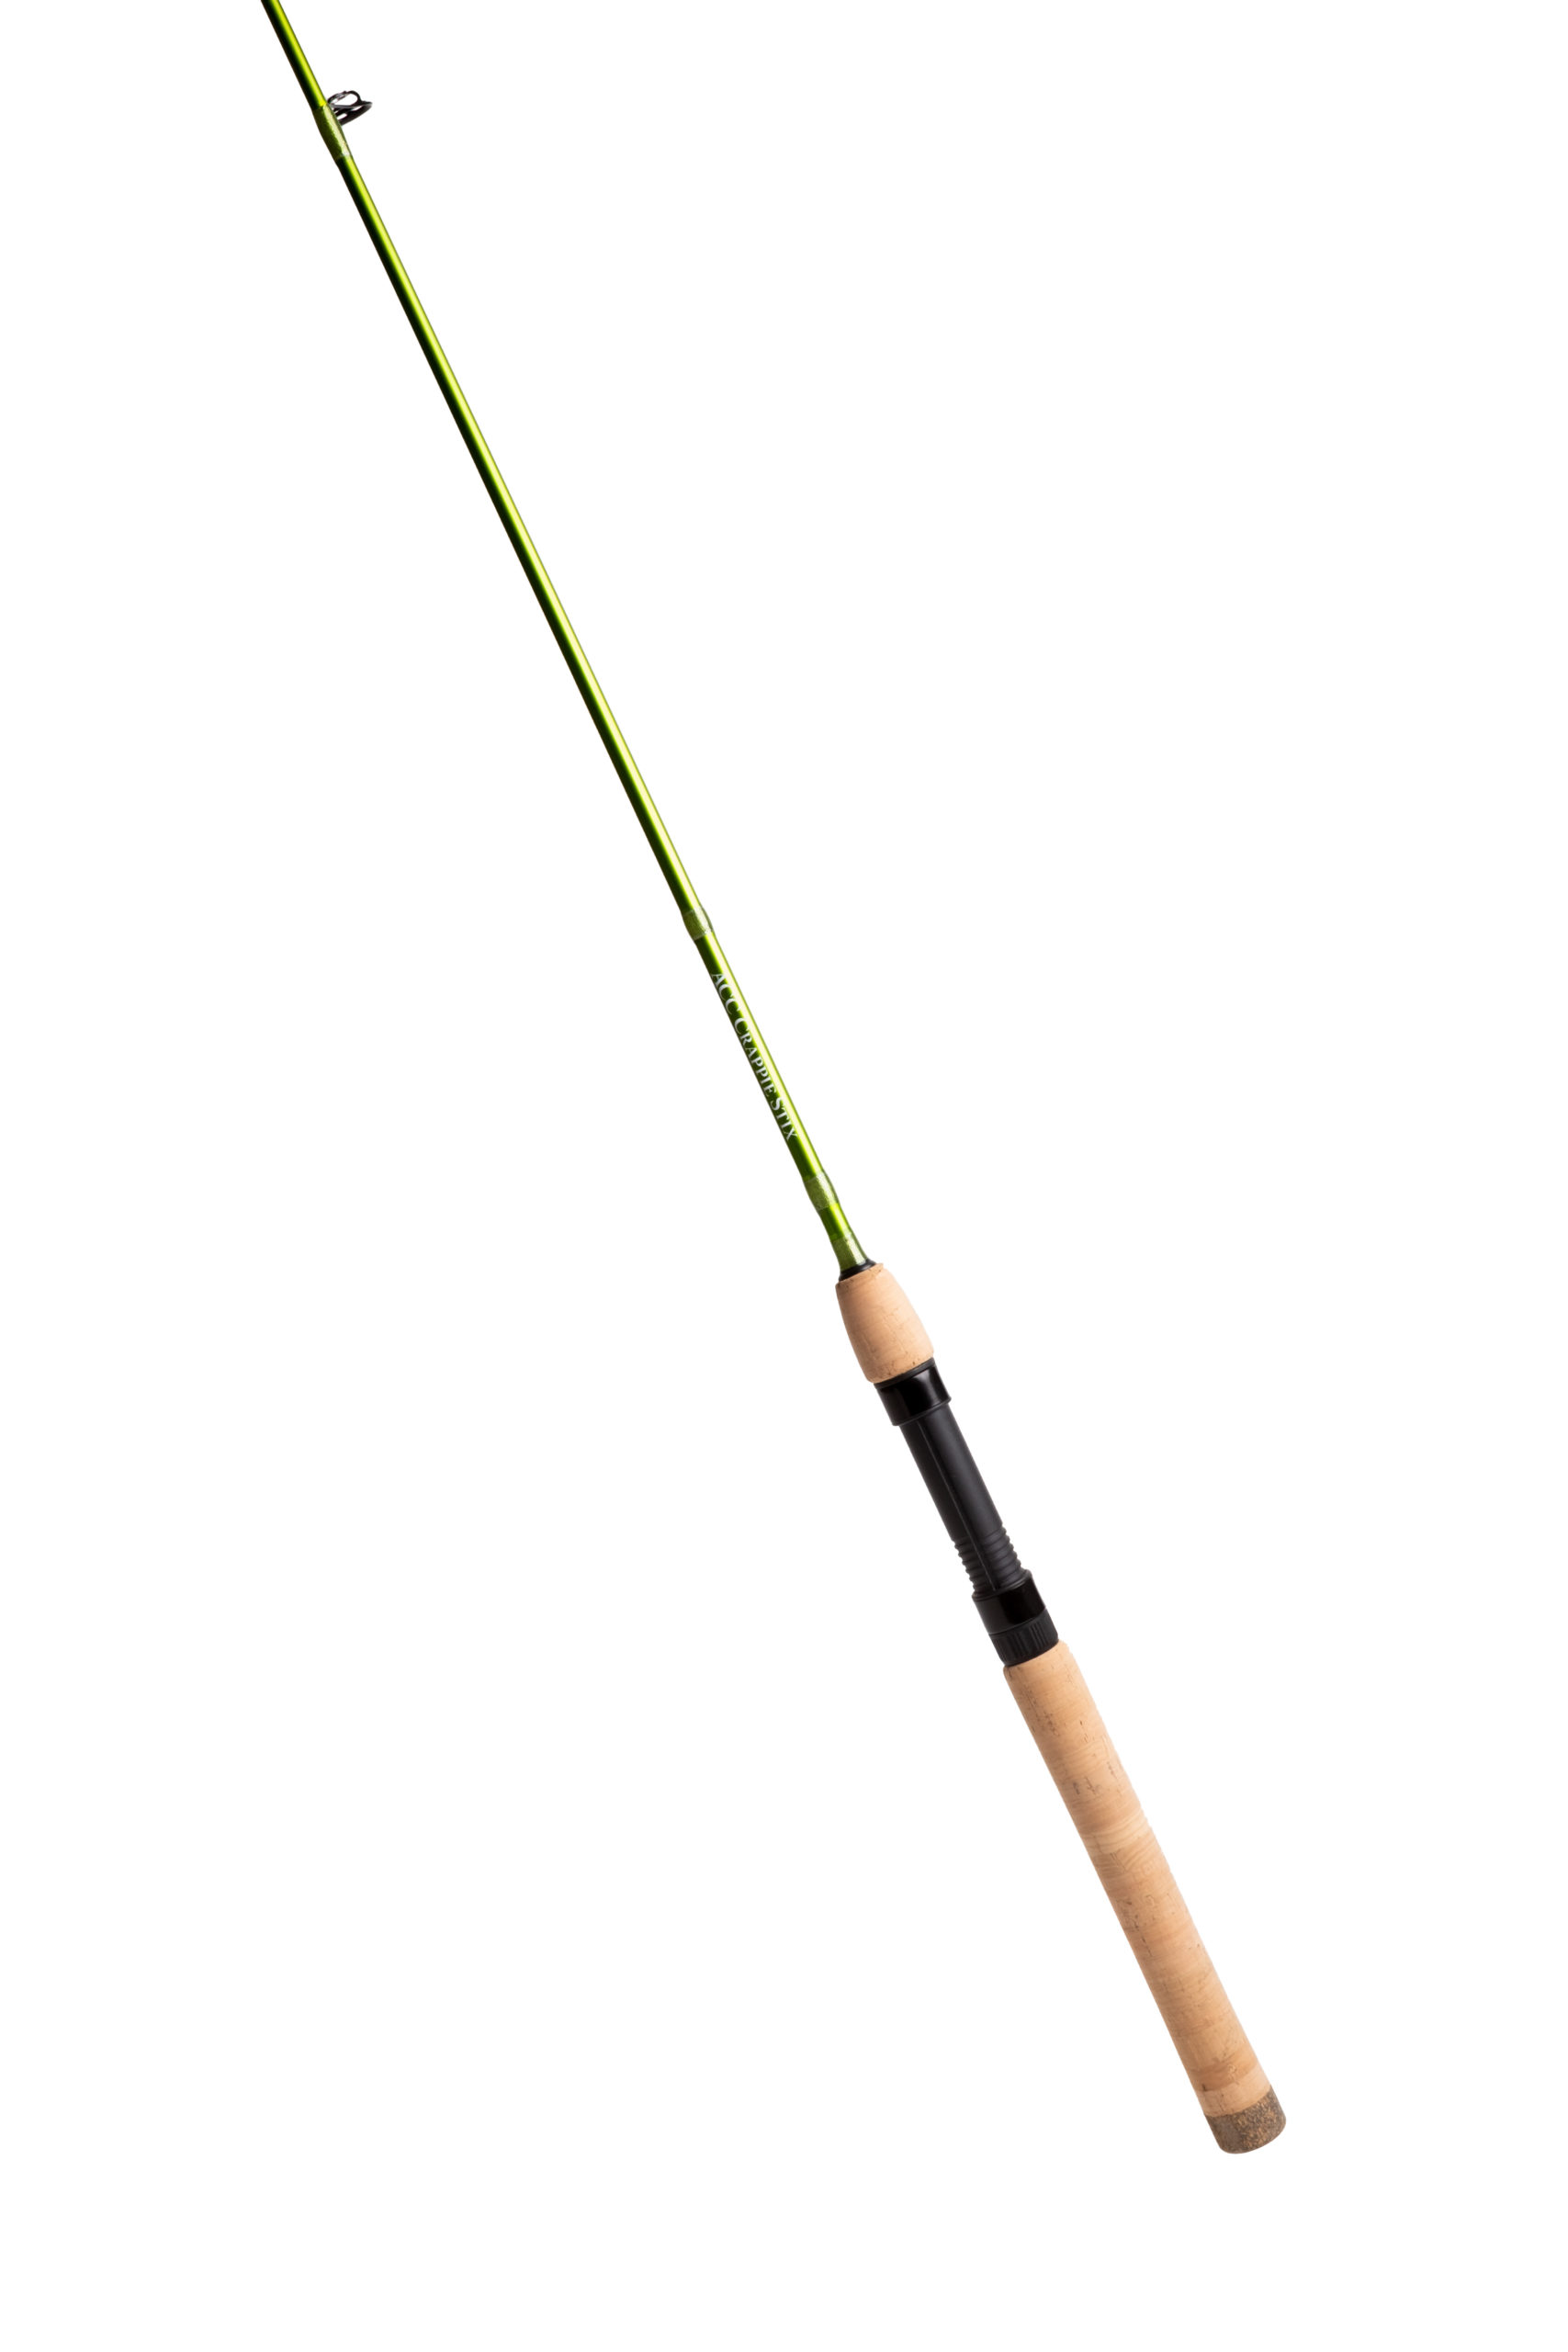 Best Panfish Rod - ACC Crappie Stix